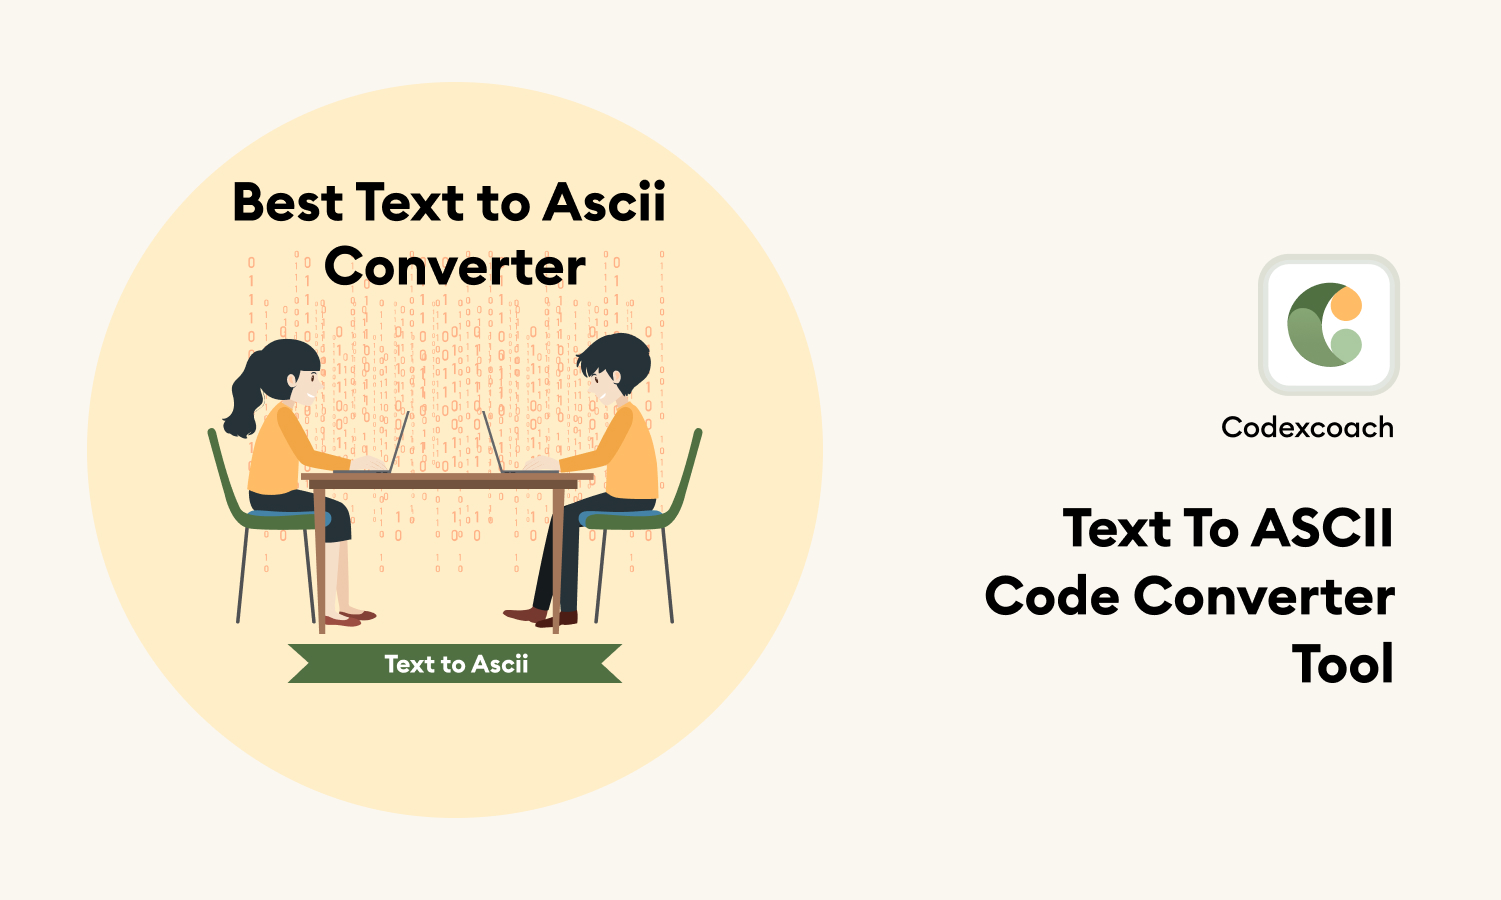 Text To ASCII Code Converter Tool